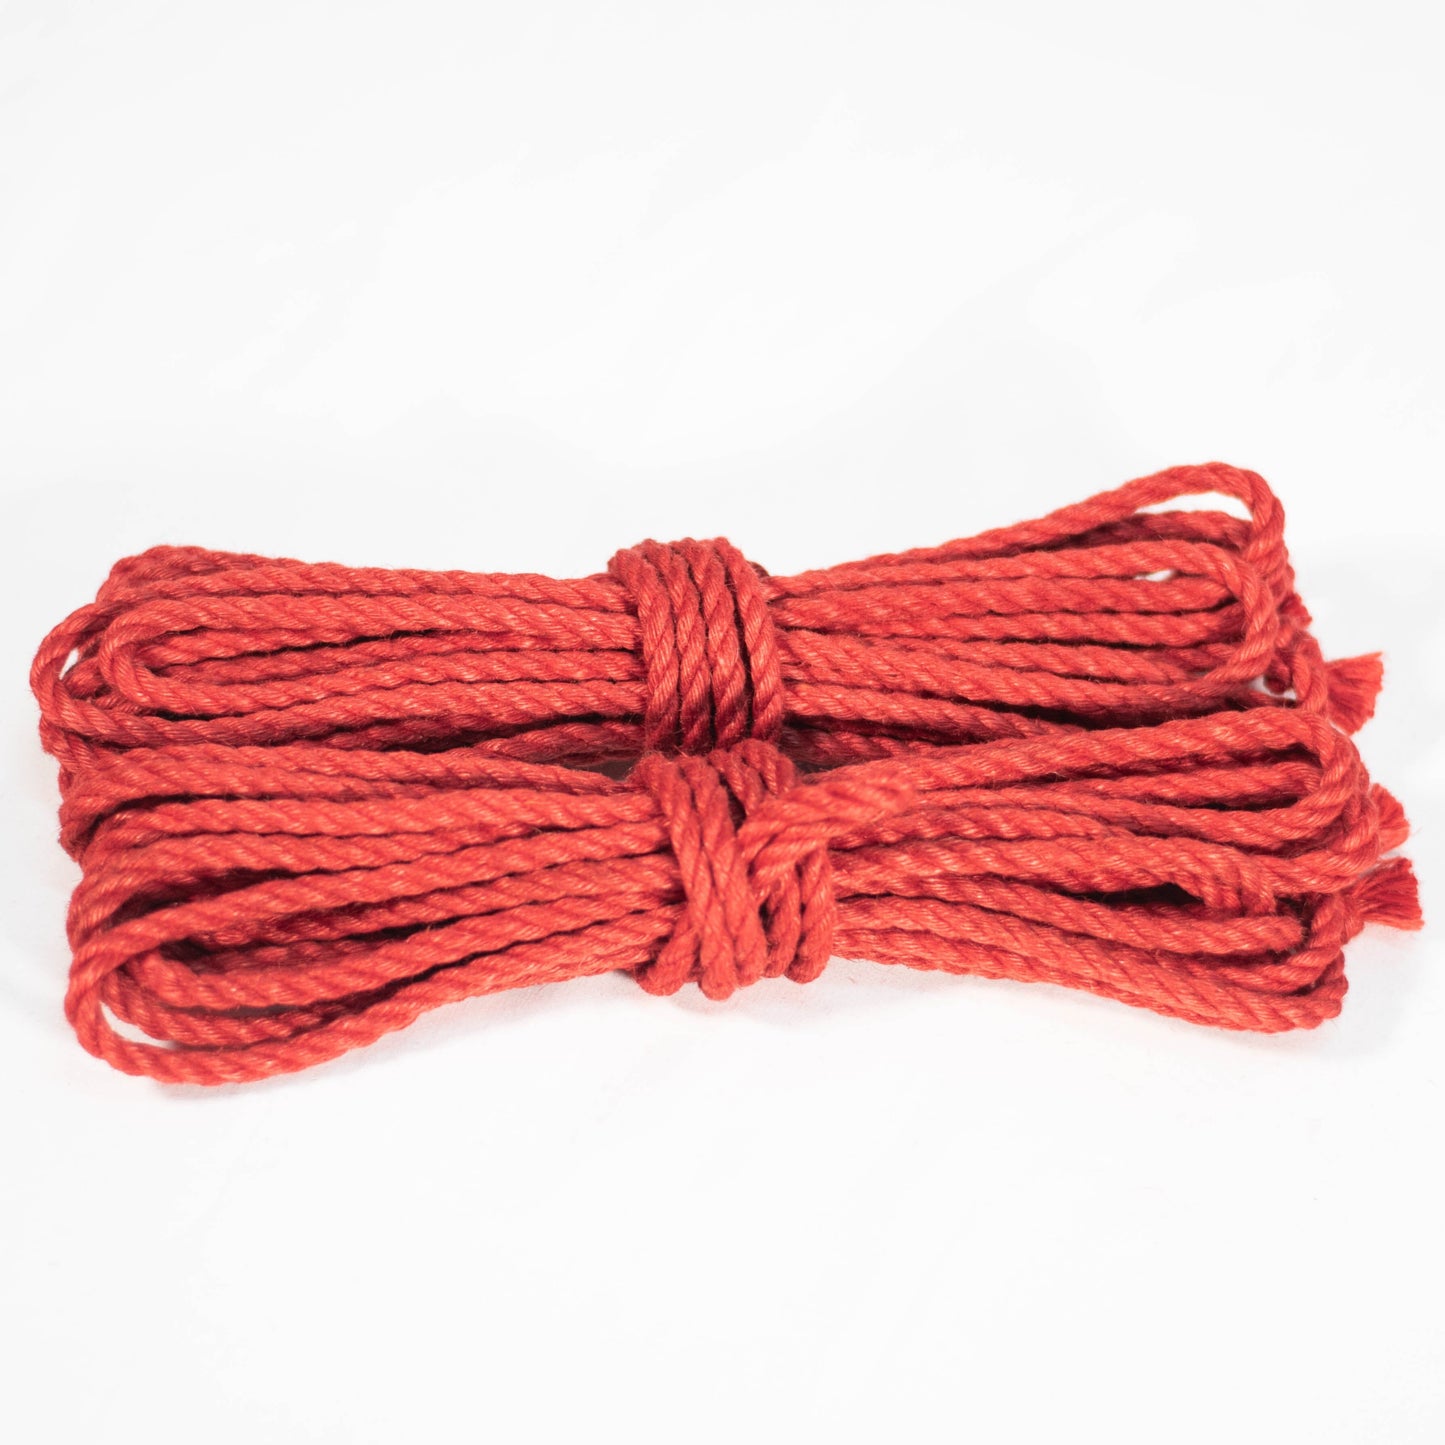 Treated Rope - 6mm Anatomie Red Jute Rope Shibari Rope Bundle of 2 